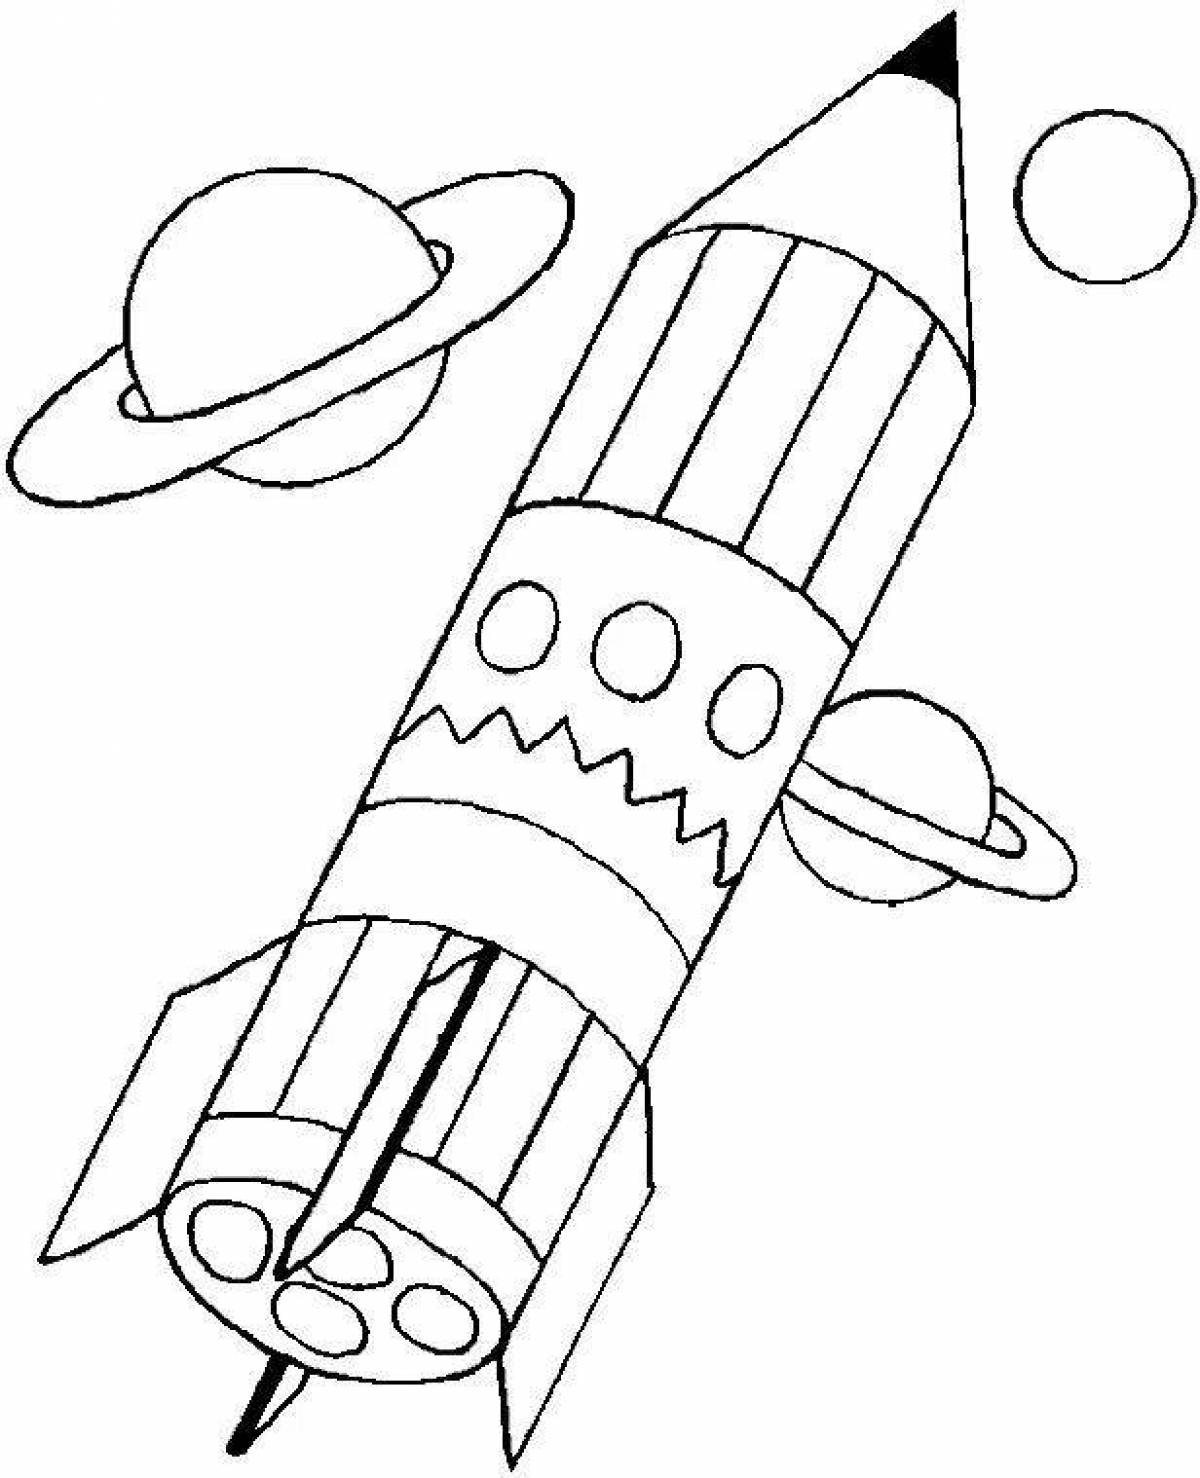 Fancy rocket coloring book for kids